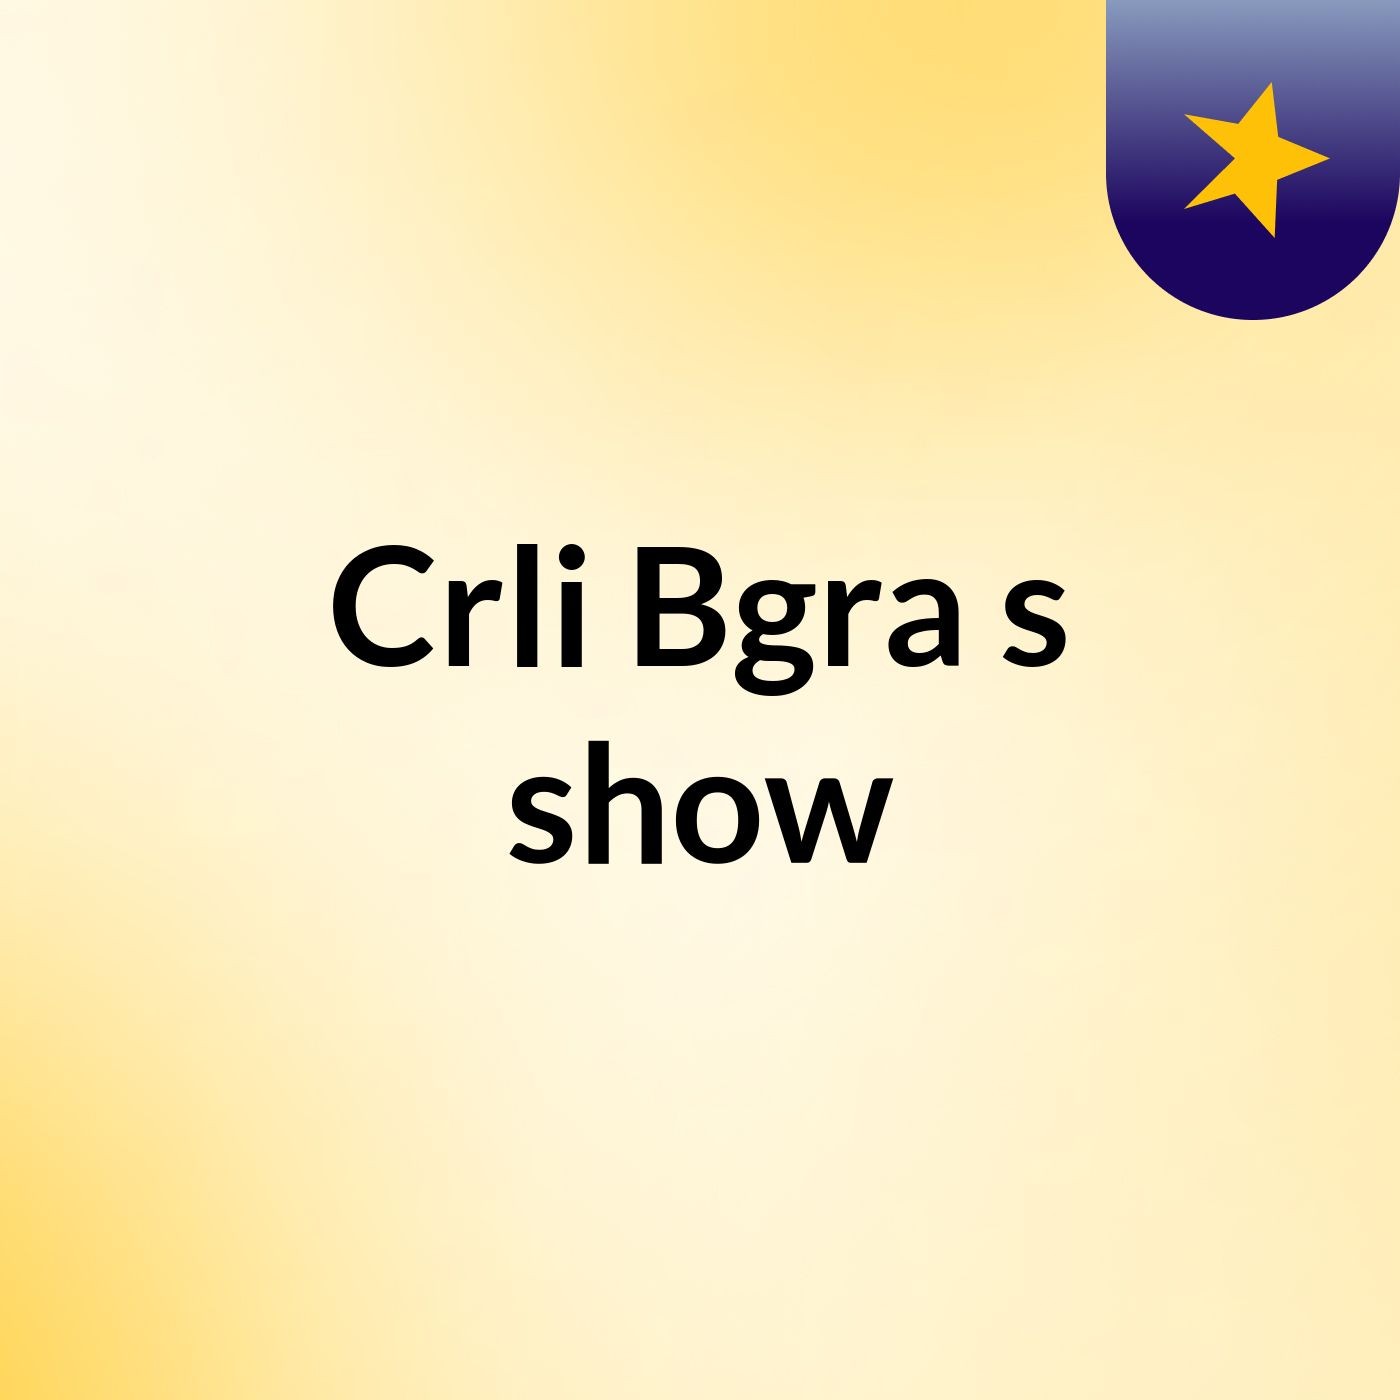 Crli Bgra's show